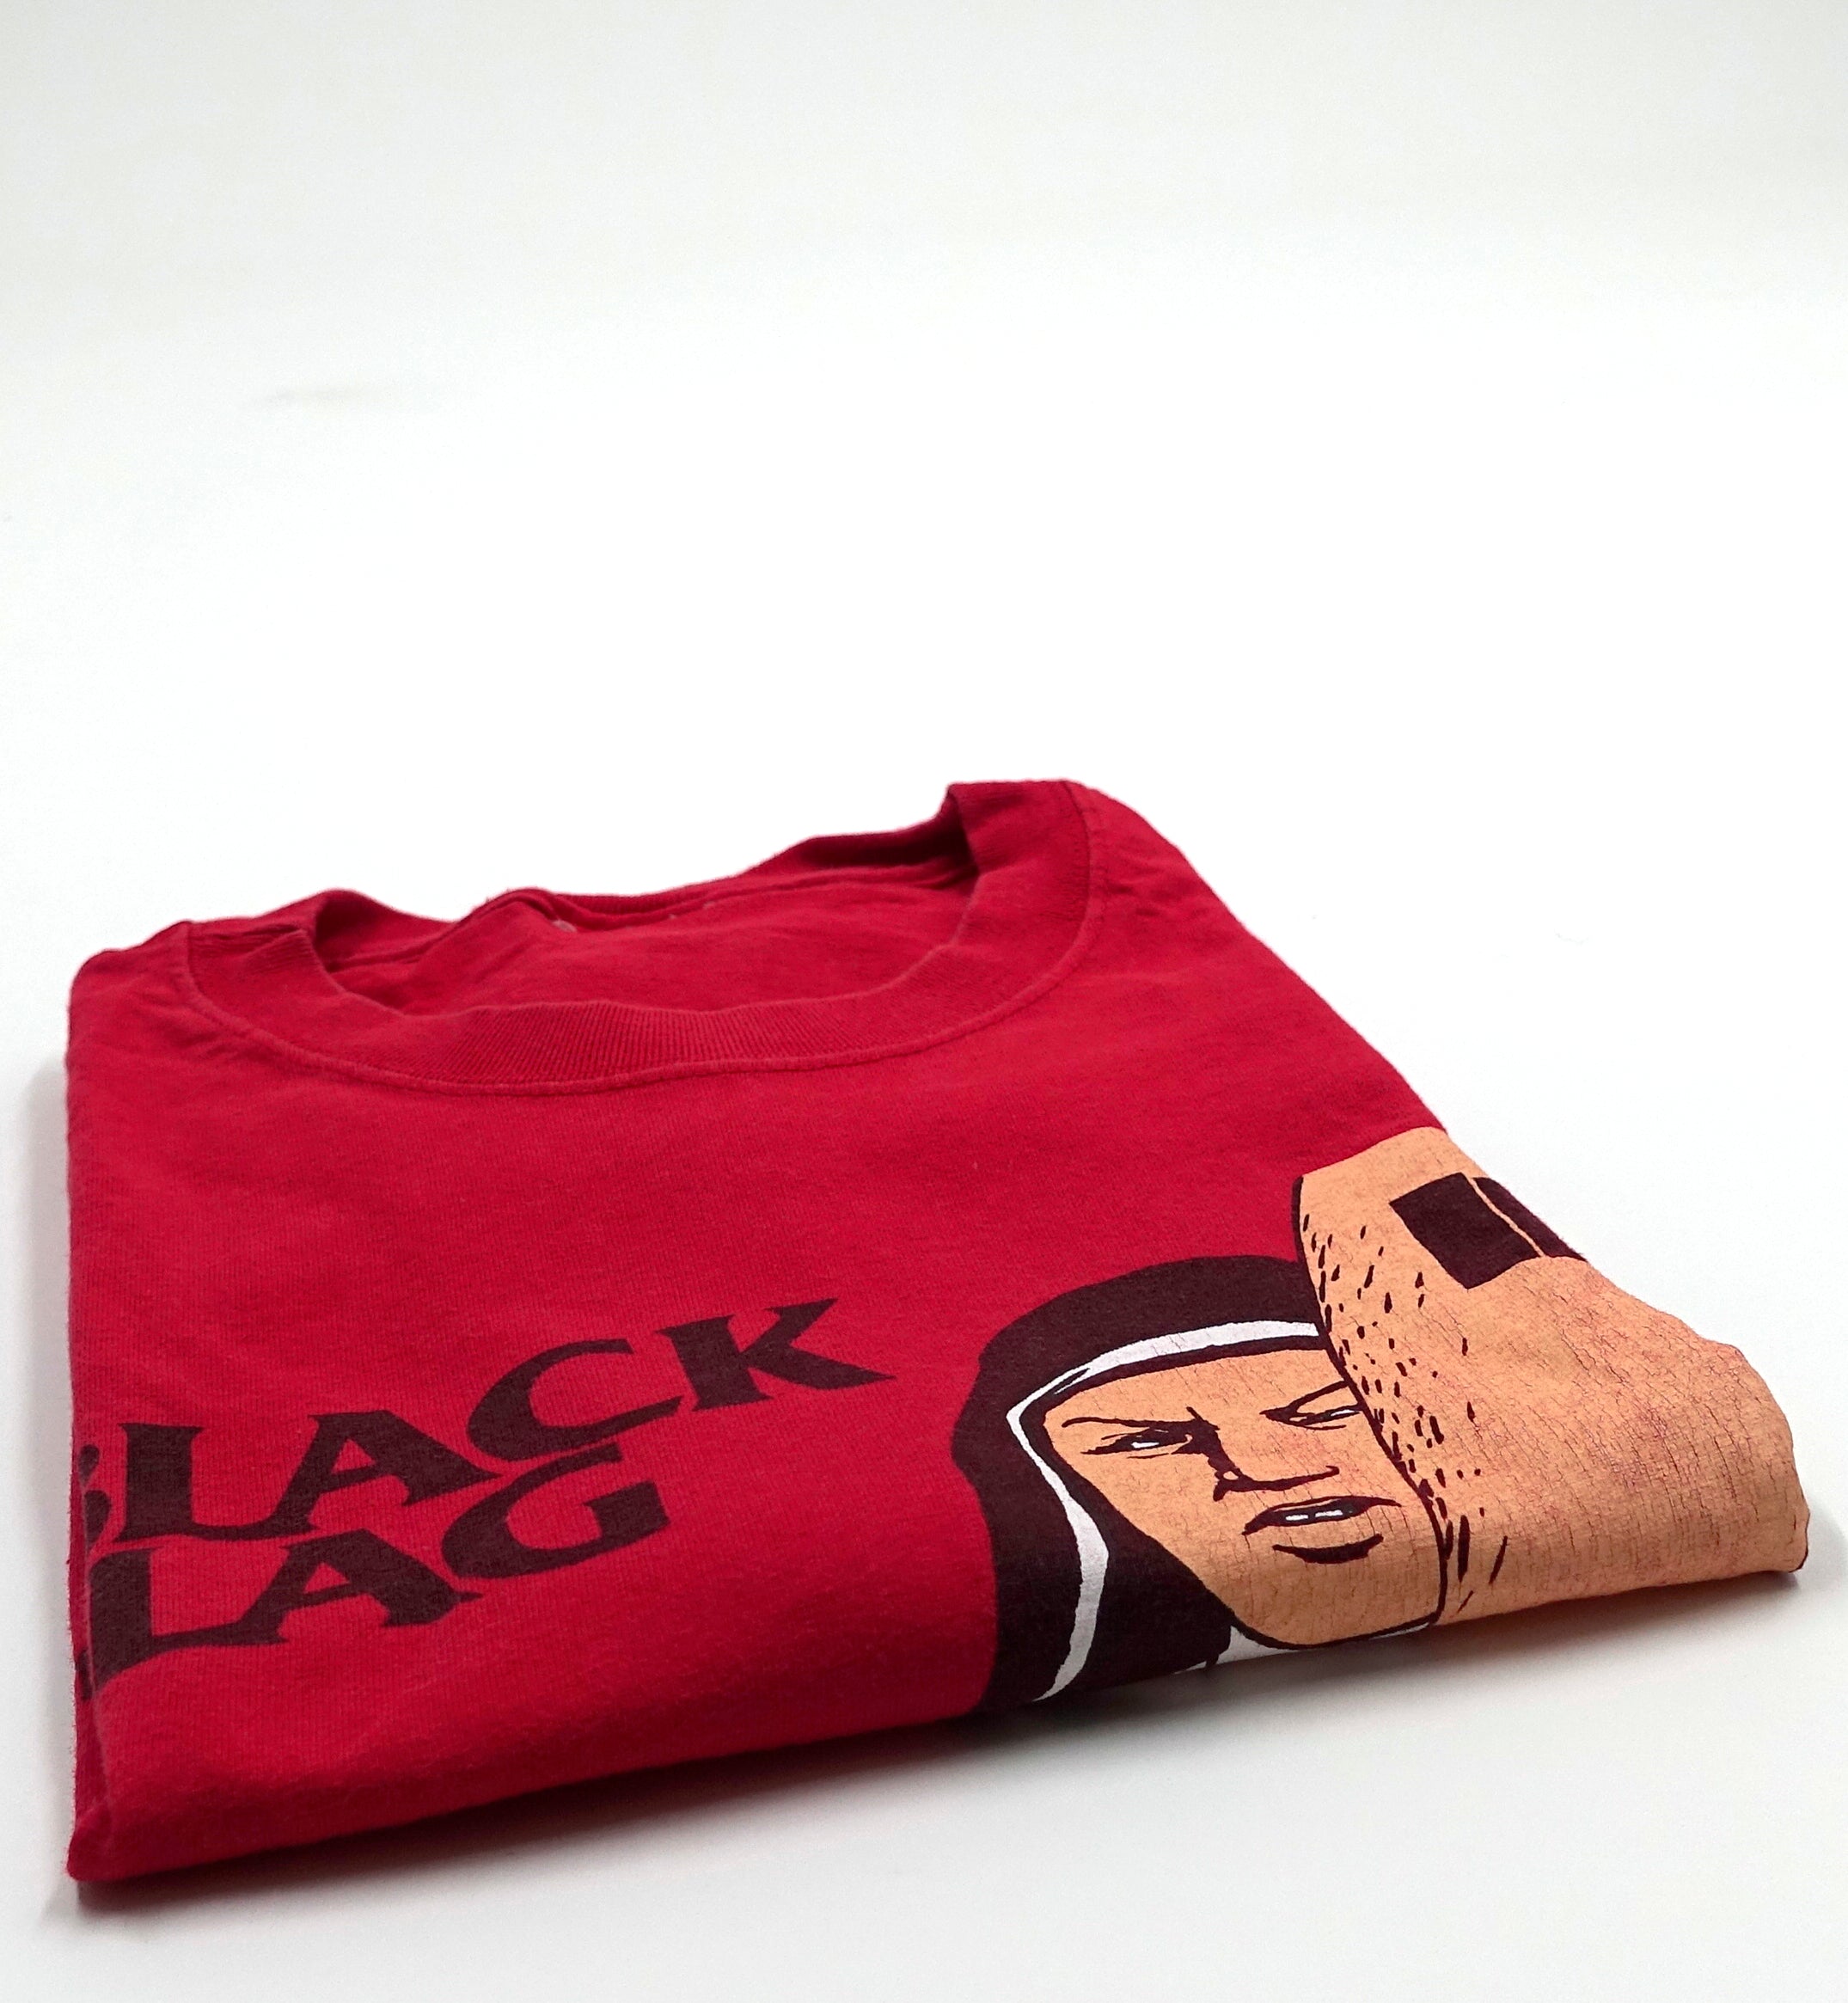 Black Flag - Slip It In 90's SST Mailorder Shirt Size Large